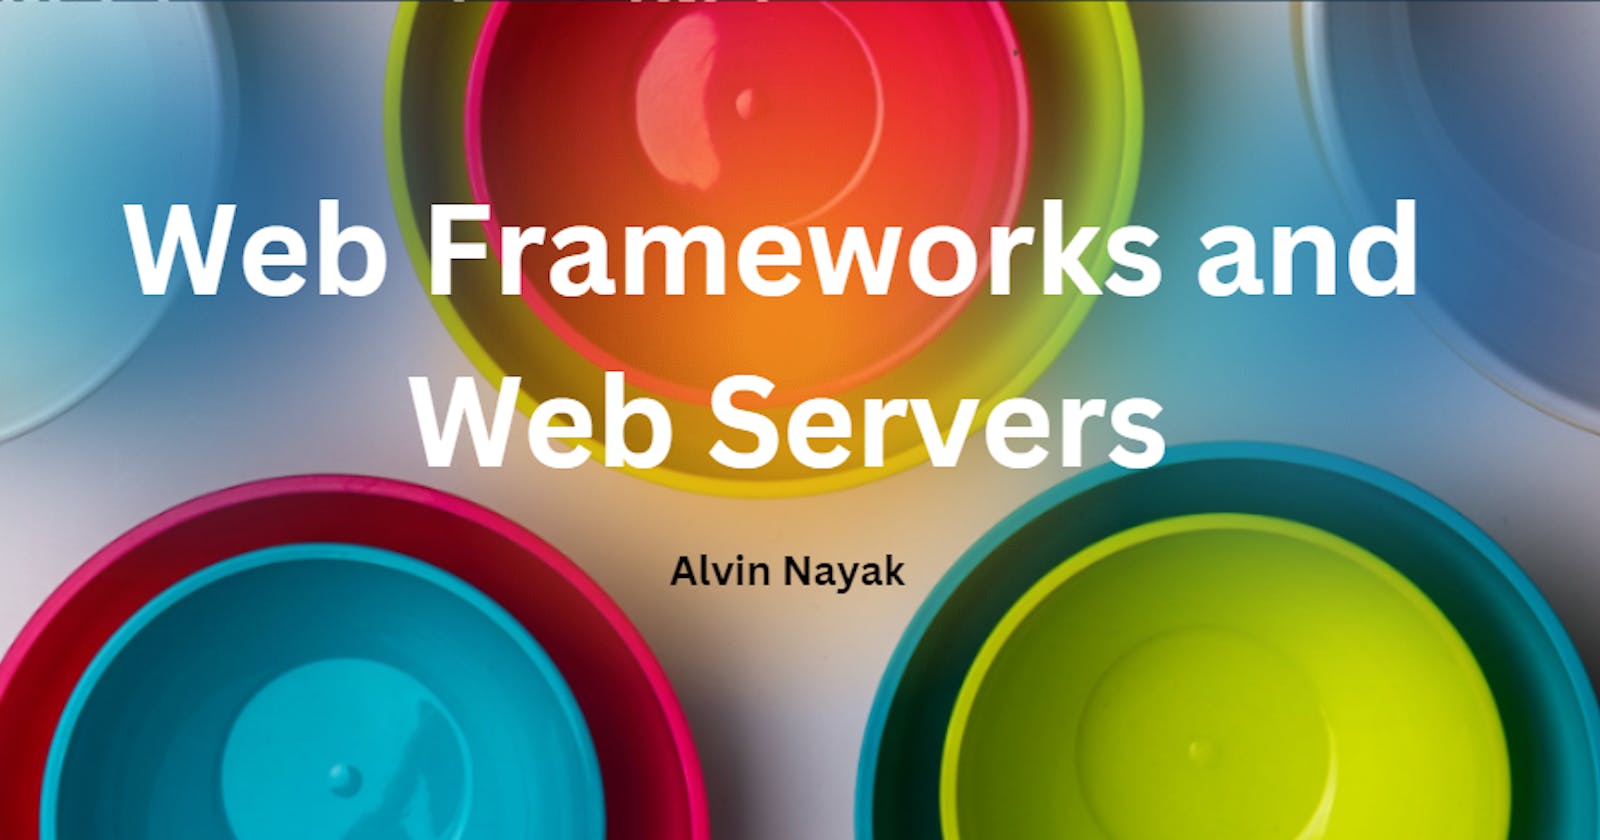 Web frameworks and Web servers